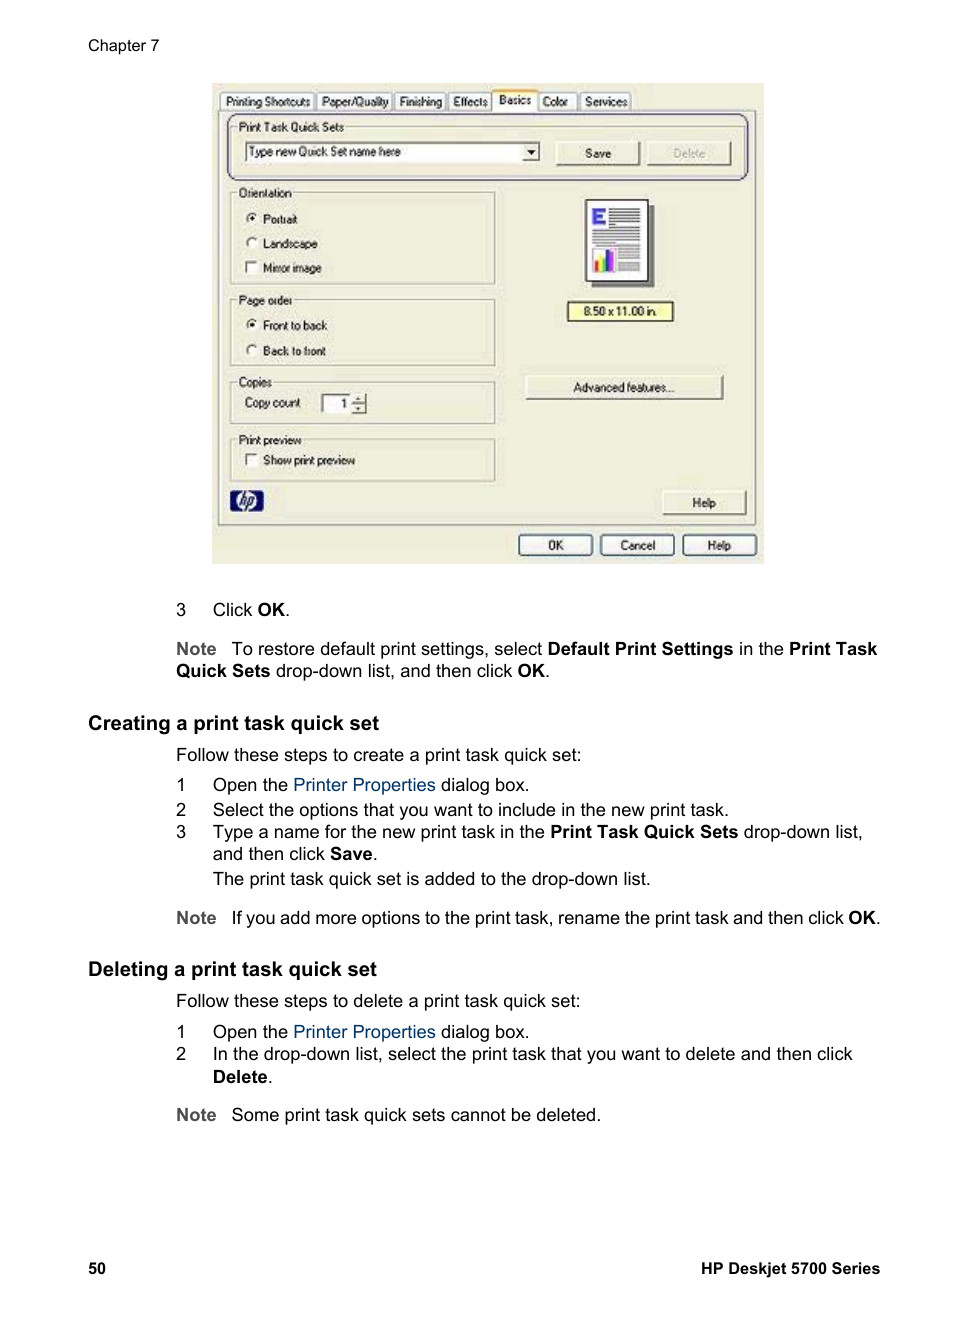 Creating a print task quick set, Deleting a print task quick set | HP